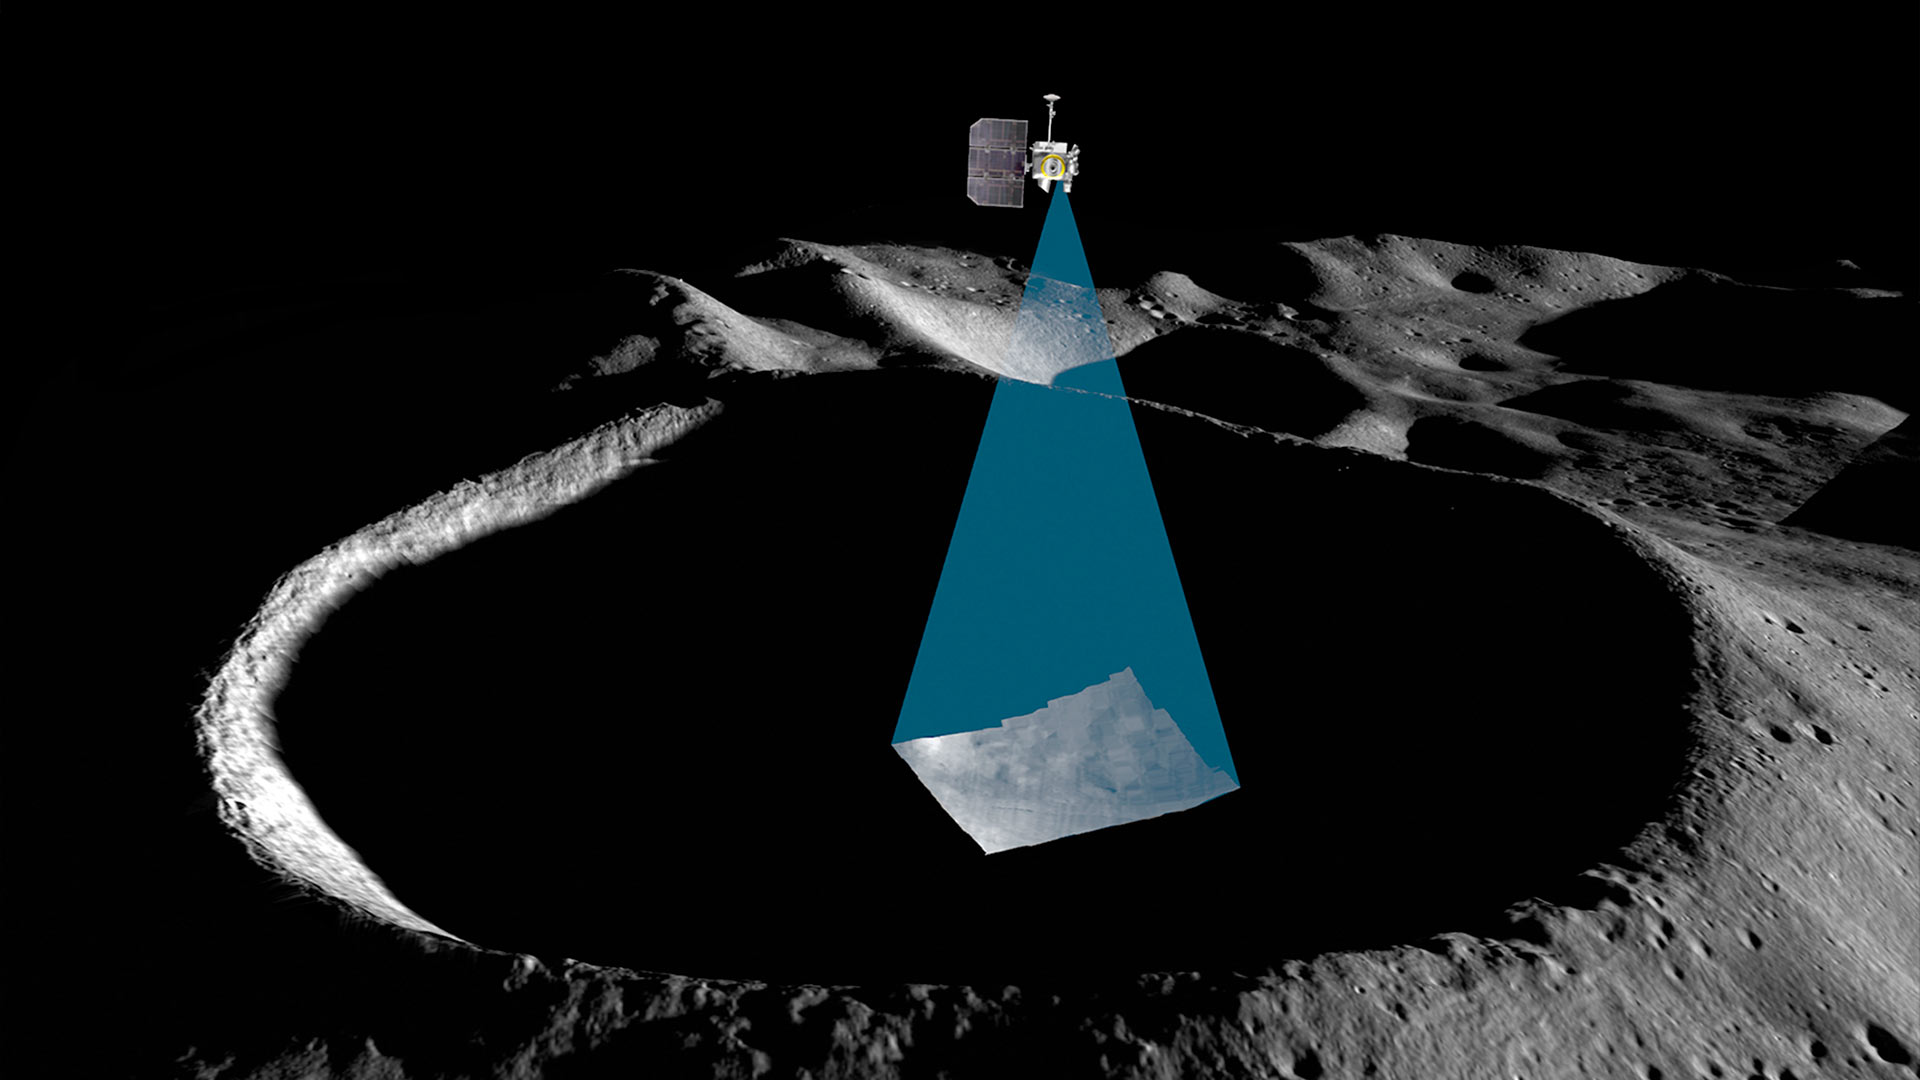 LRO (Lunar Reconnaissance Orbiter) will photograph the moon crash site.